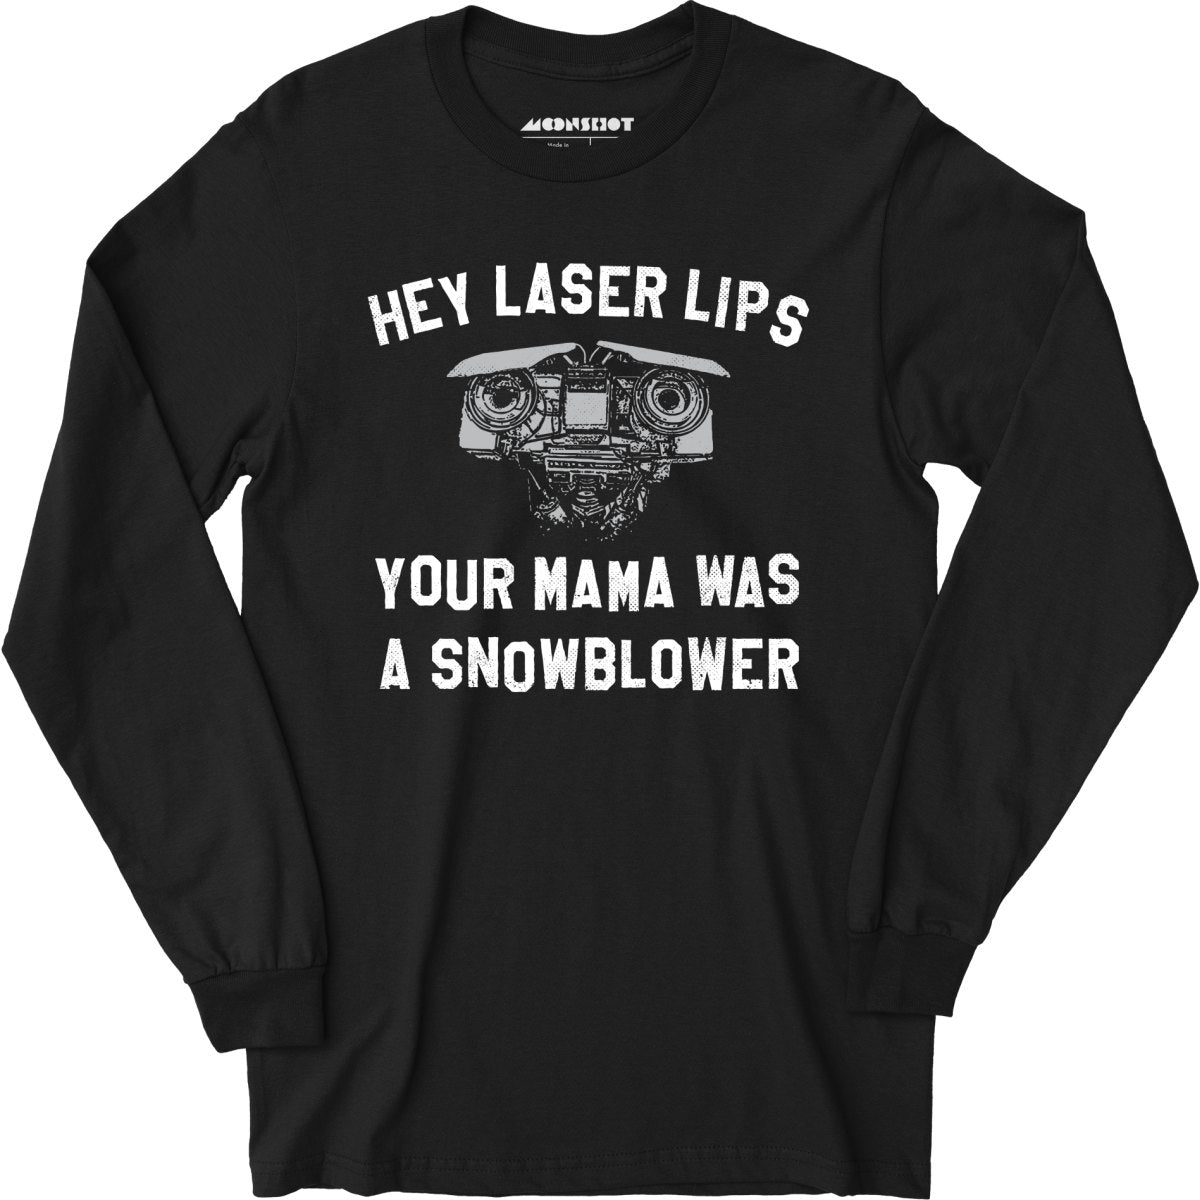 Hey Laser Lips - Long Sleeve T-Shirt